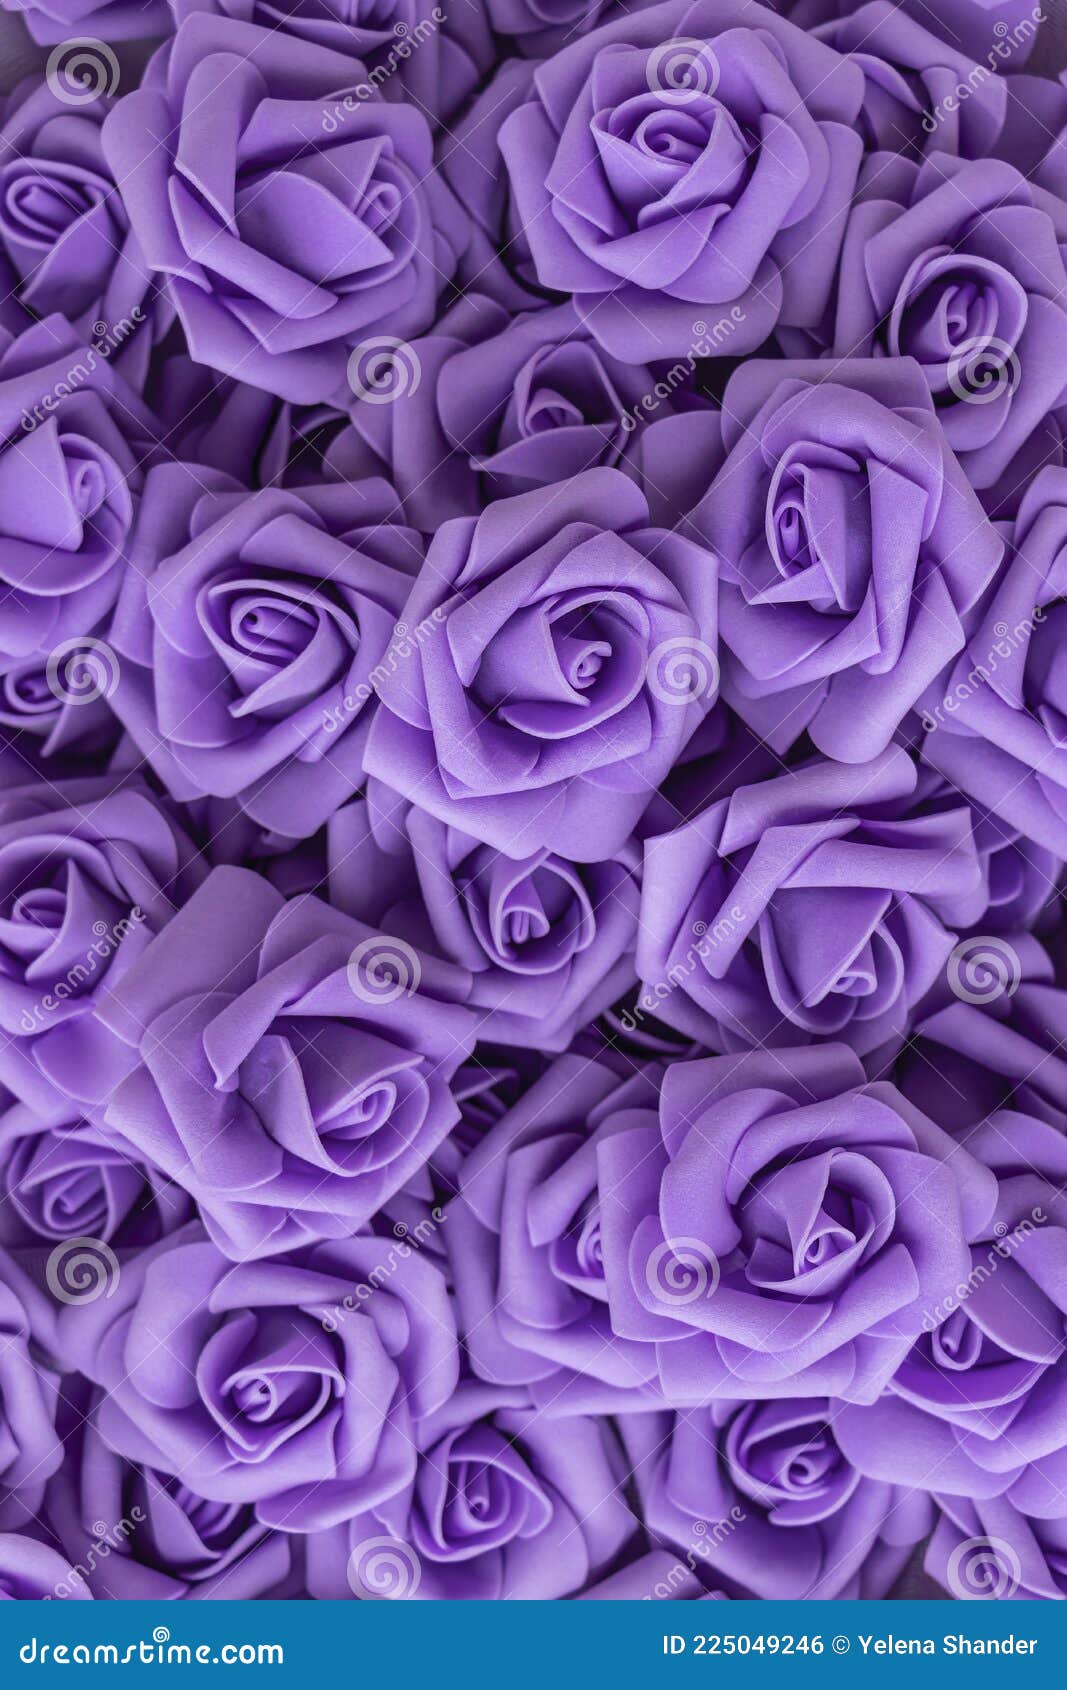 Fondo De Flores Moradas O Lilas. Flores Falsas. Rosas Púrpuras Artificiales  O Lilas Rosas Foamiran. Foto de archivo - Imagen de amor, ramo: 225049246